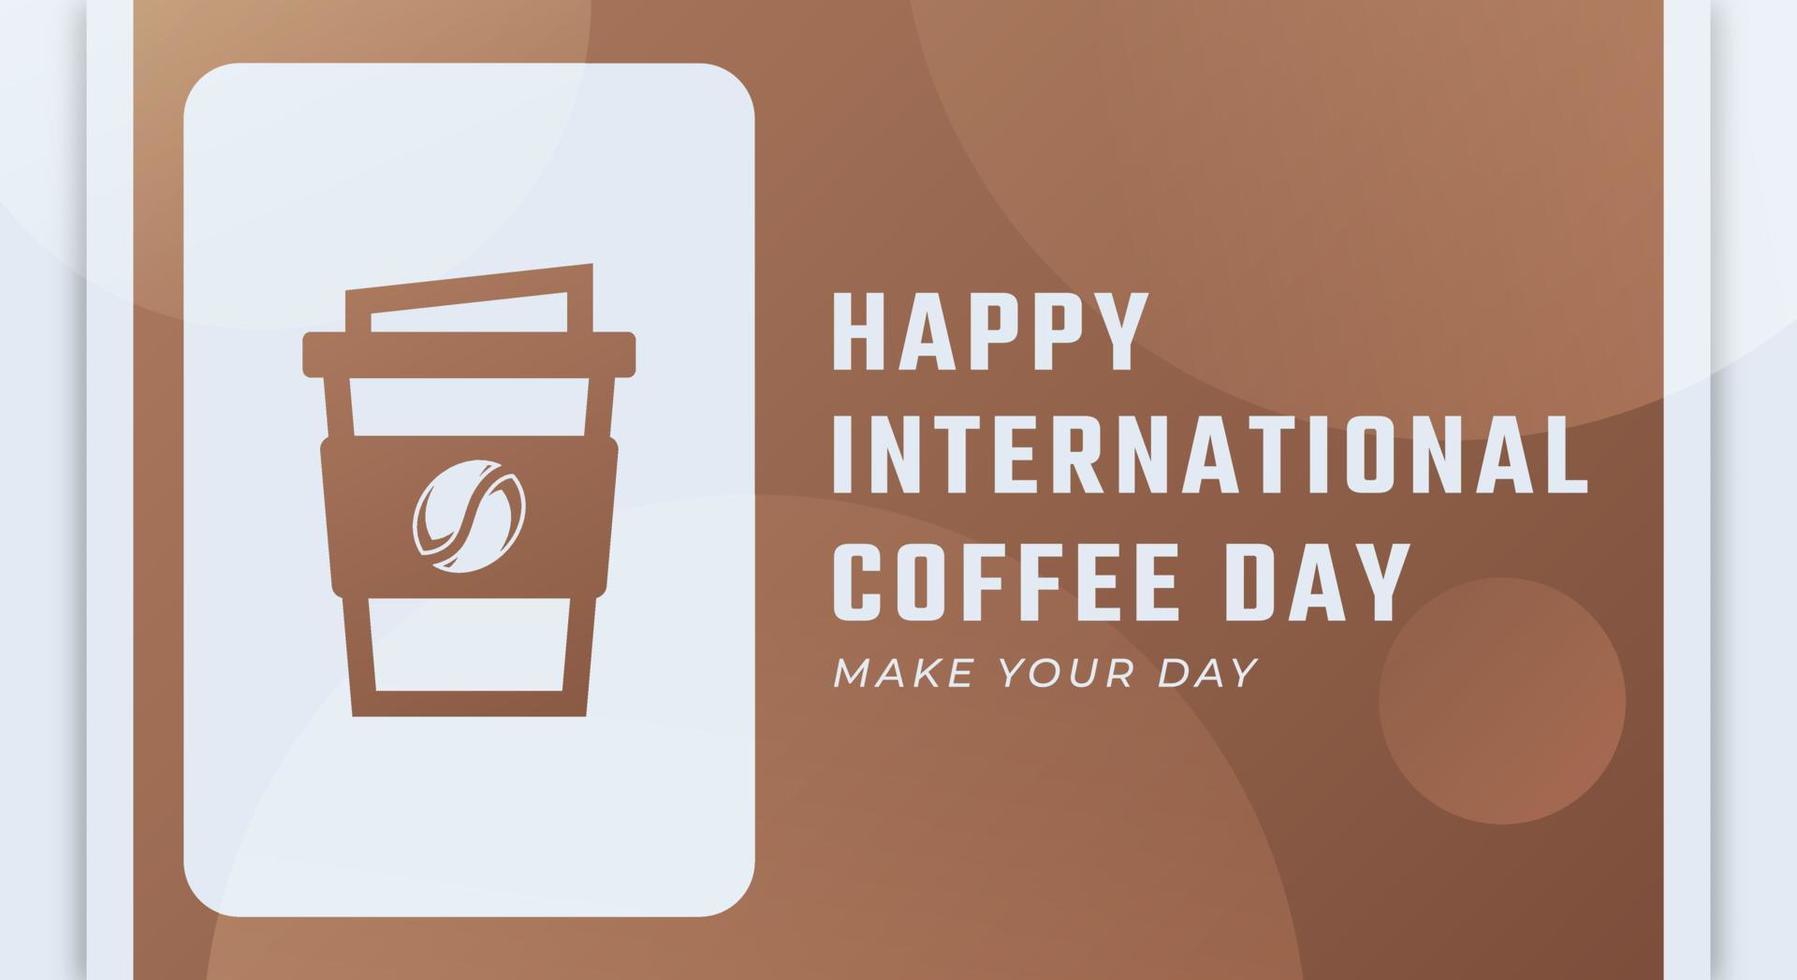 Happy International Coffee Day October Celebration Vector Design Illustration. Template for Background, Poster, Banner, Advertising, Greeting Card or Print Design Element